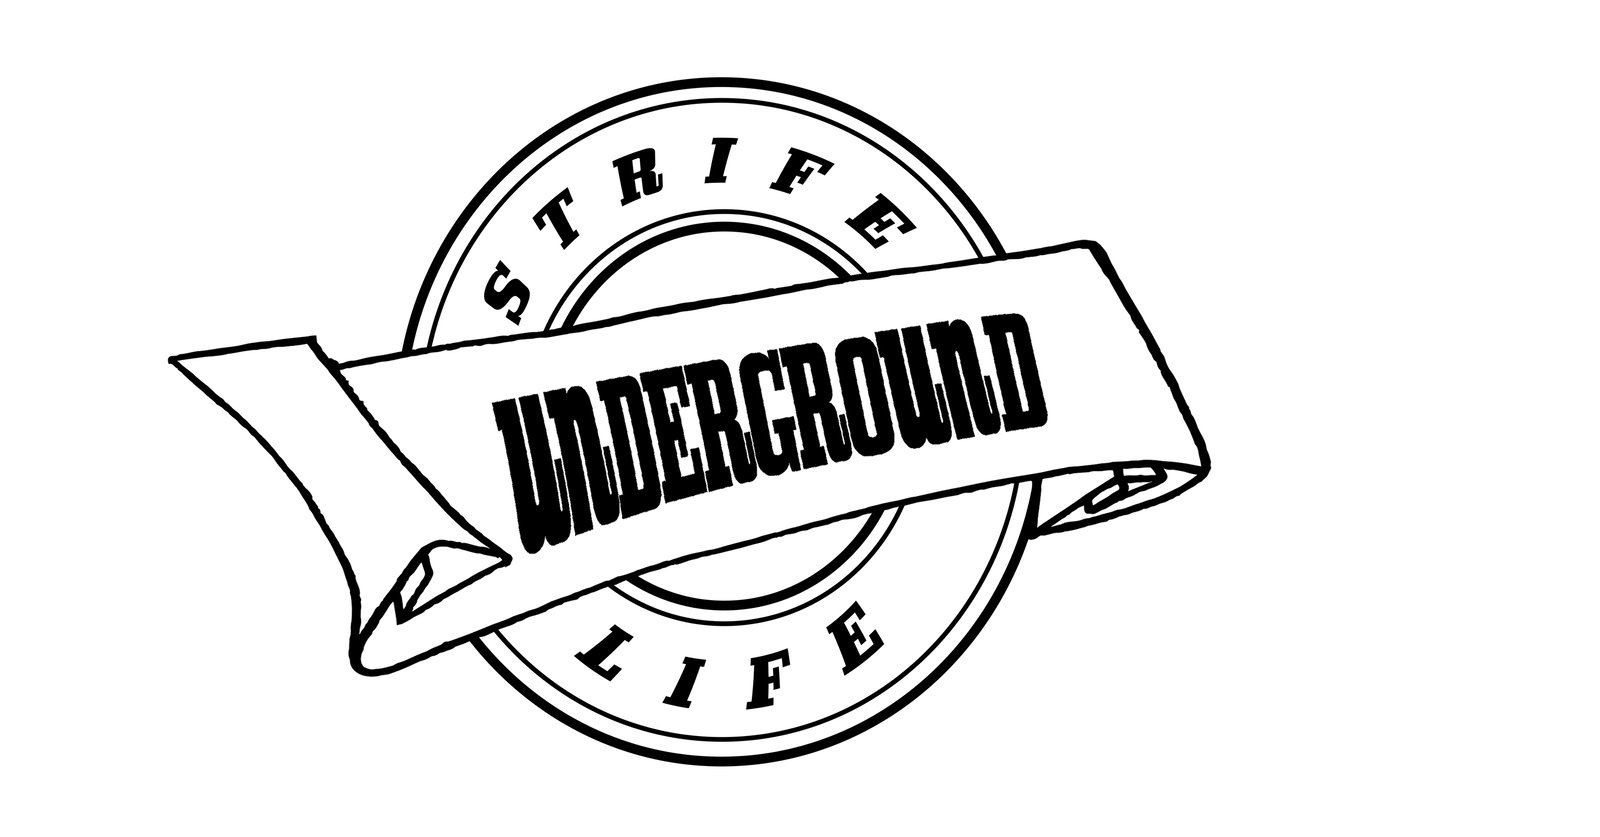 Strife Underground Life